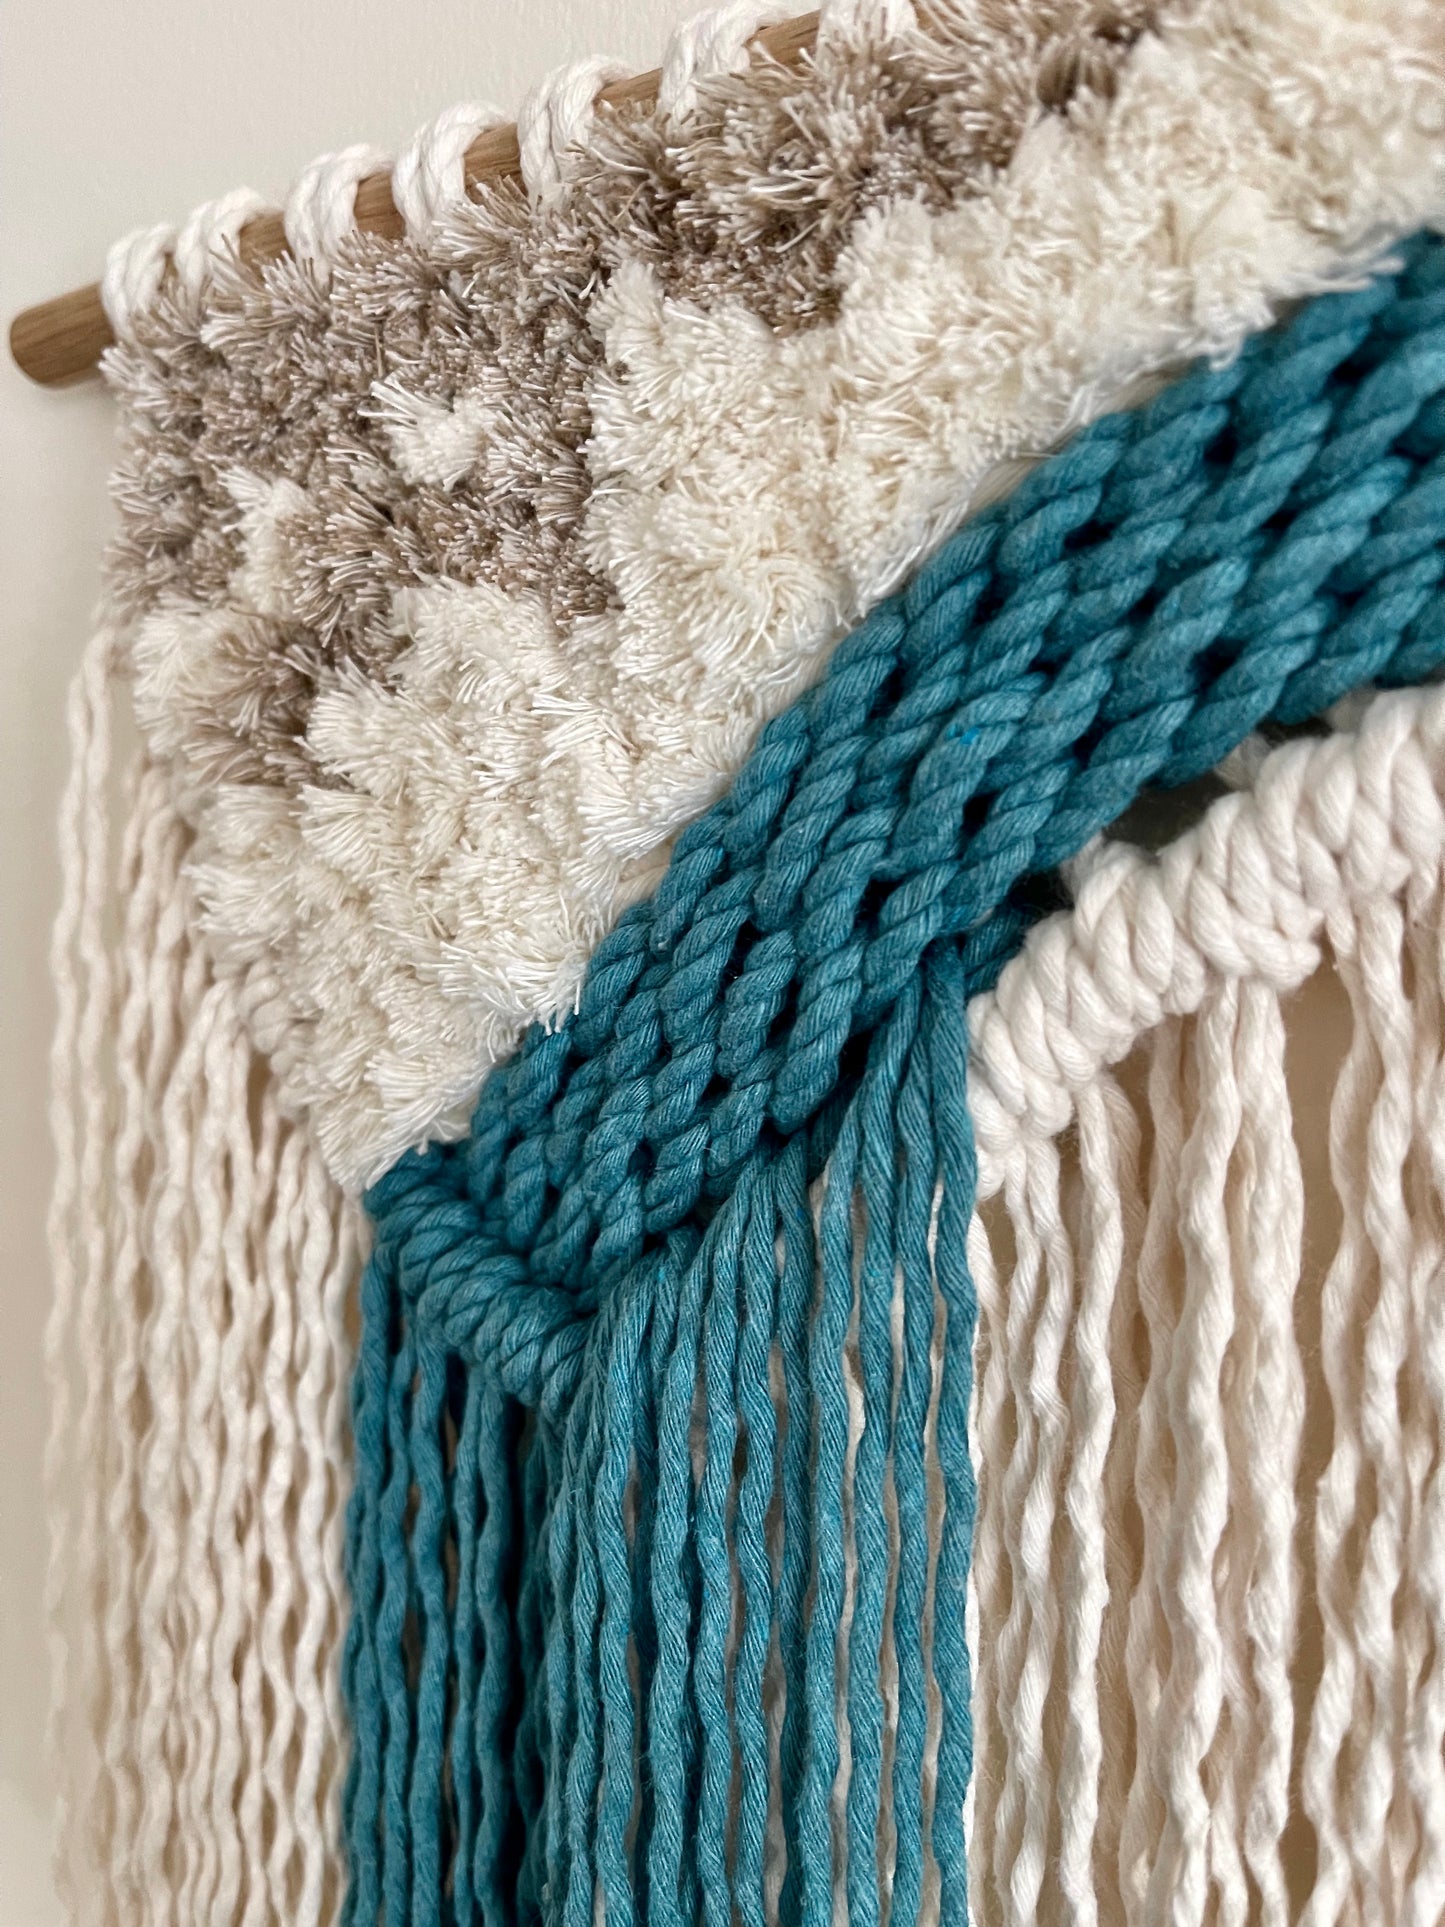 Handmade ocean inspired macraweave fibre wall hanging in cream and teal